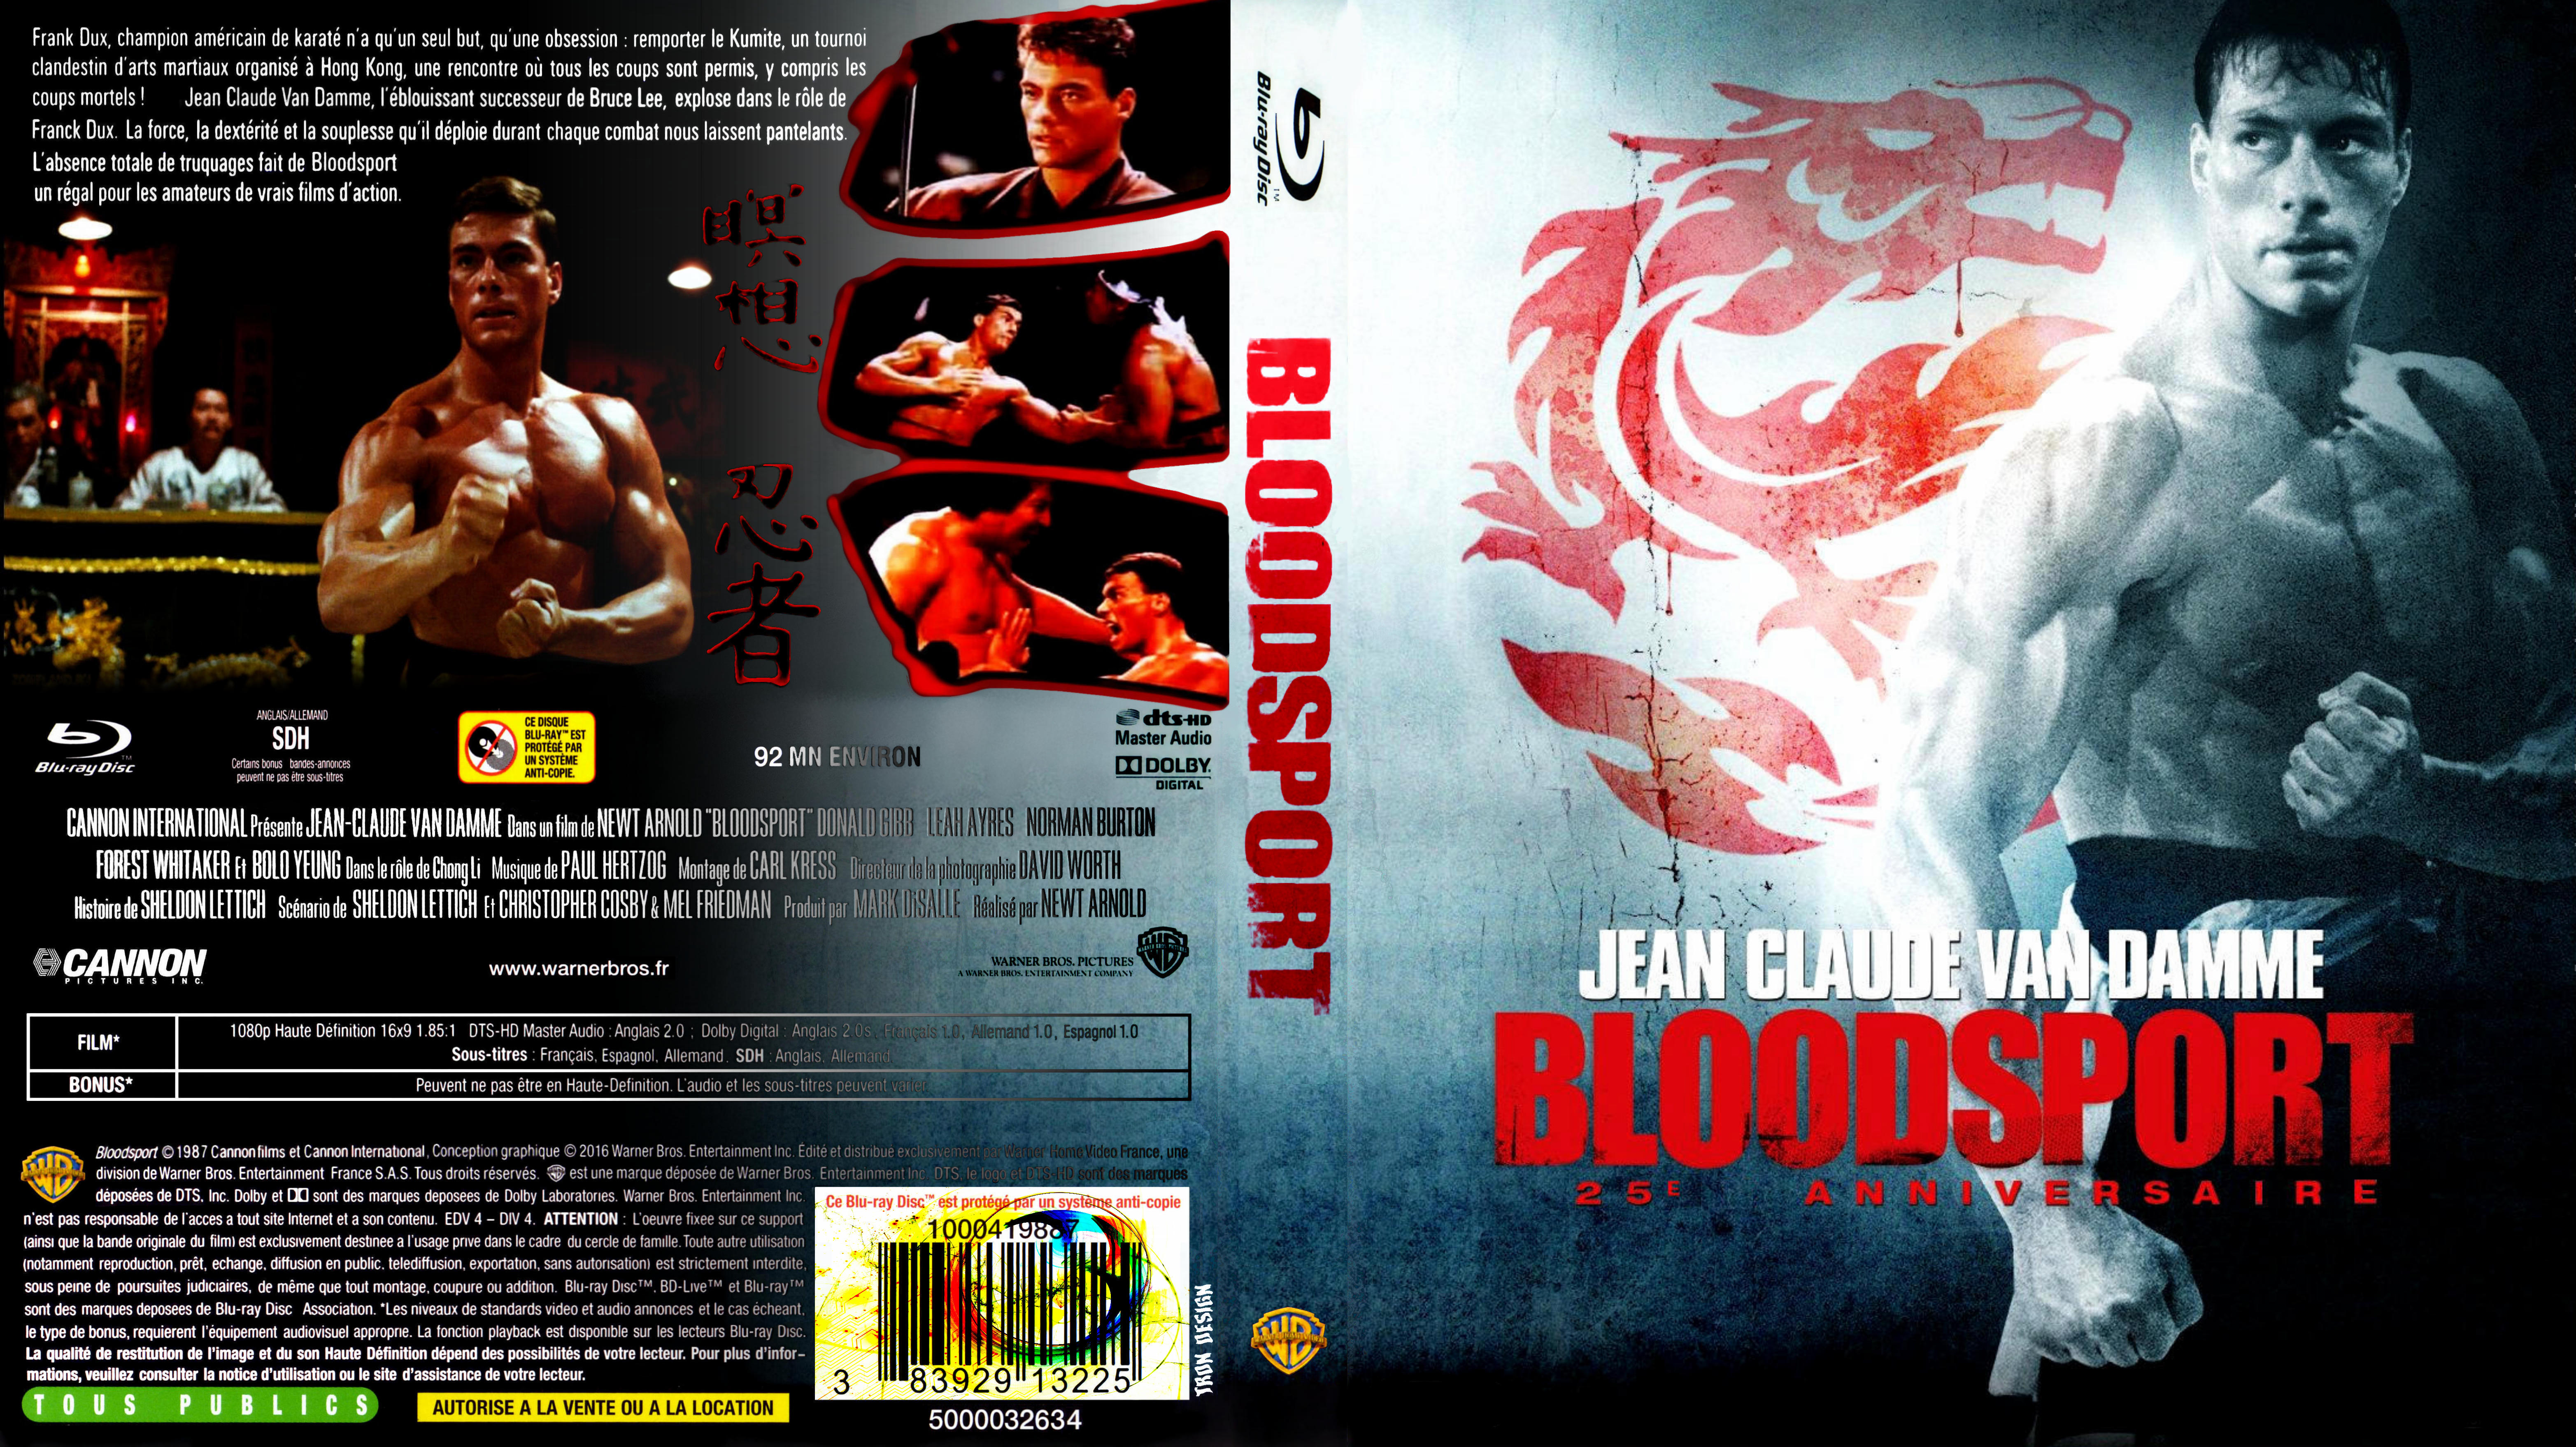 Jaquette DVD Bloodsport custom (BLU-RAY) v2